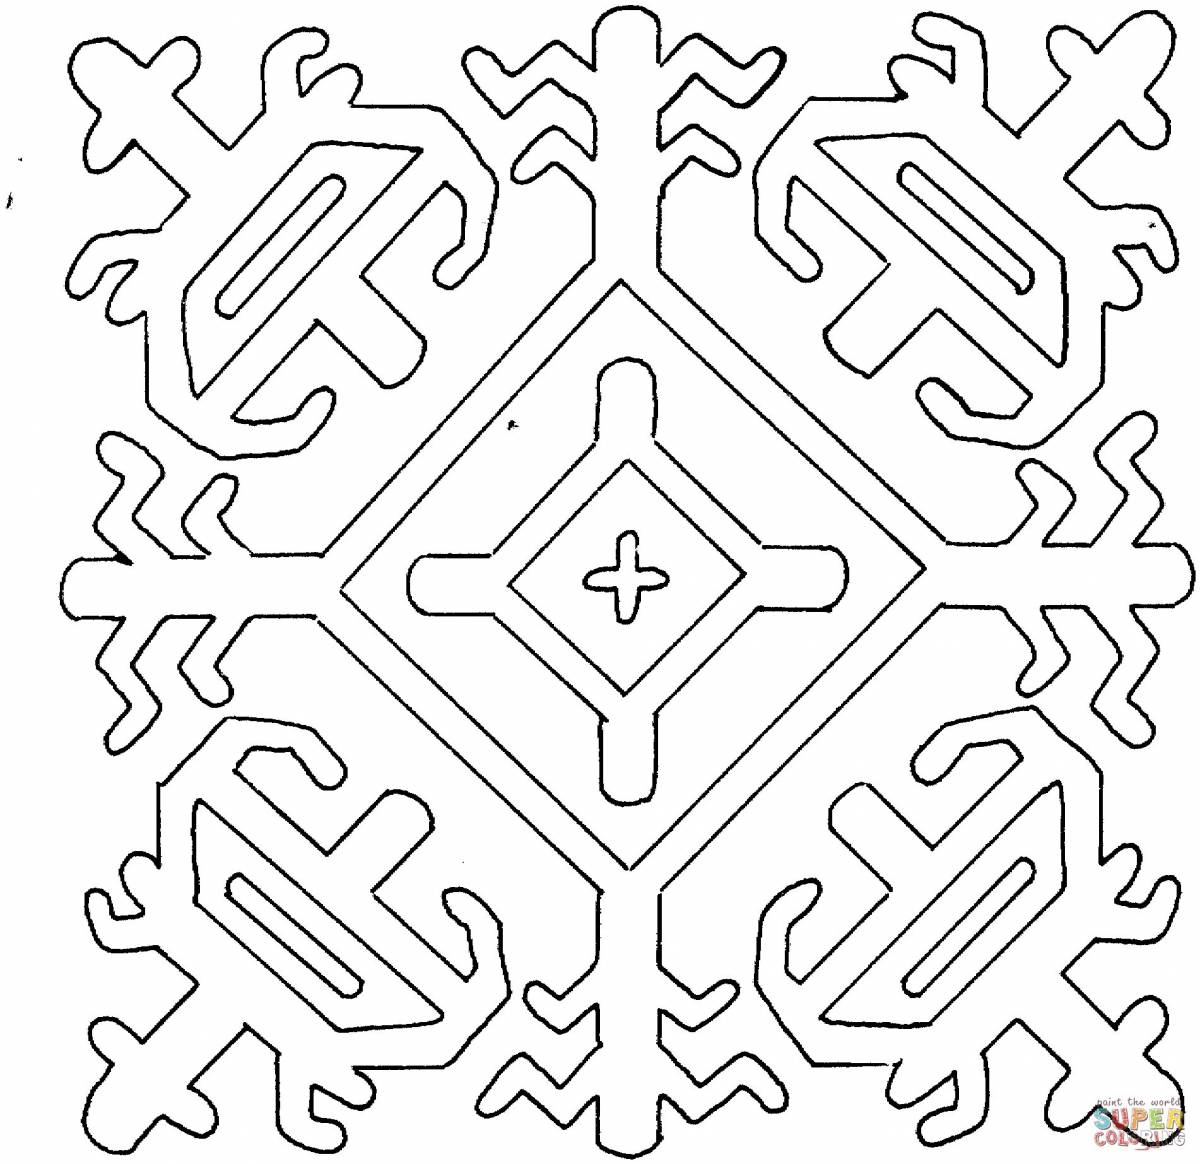 Coloring geometric Chuvash patterns